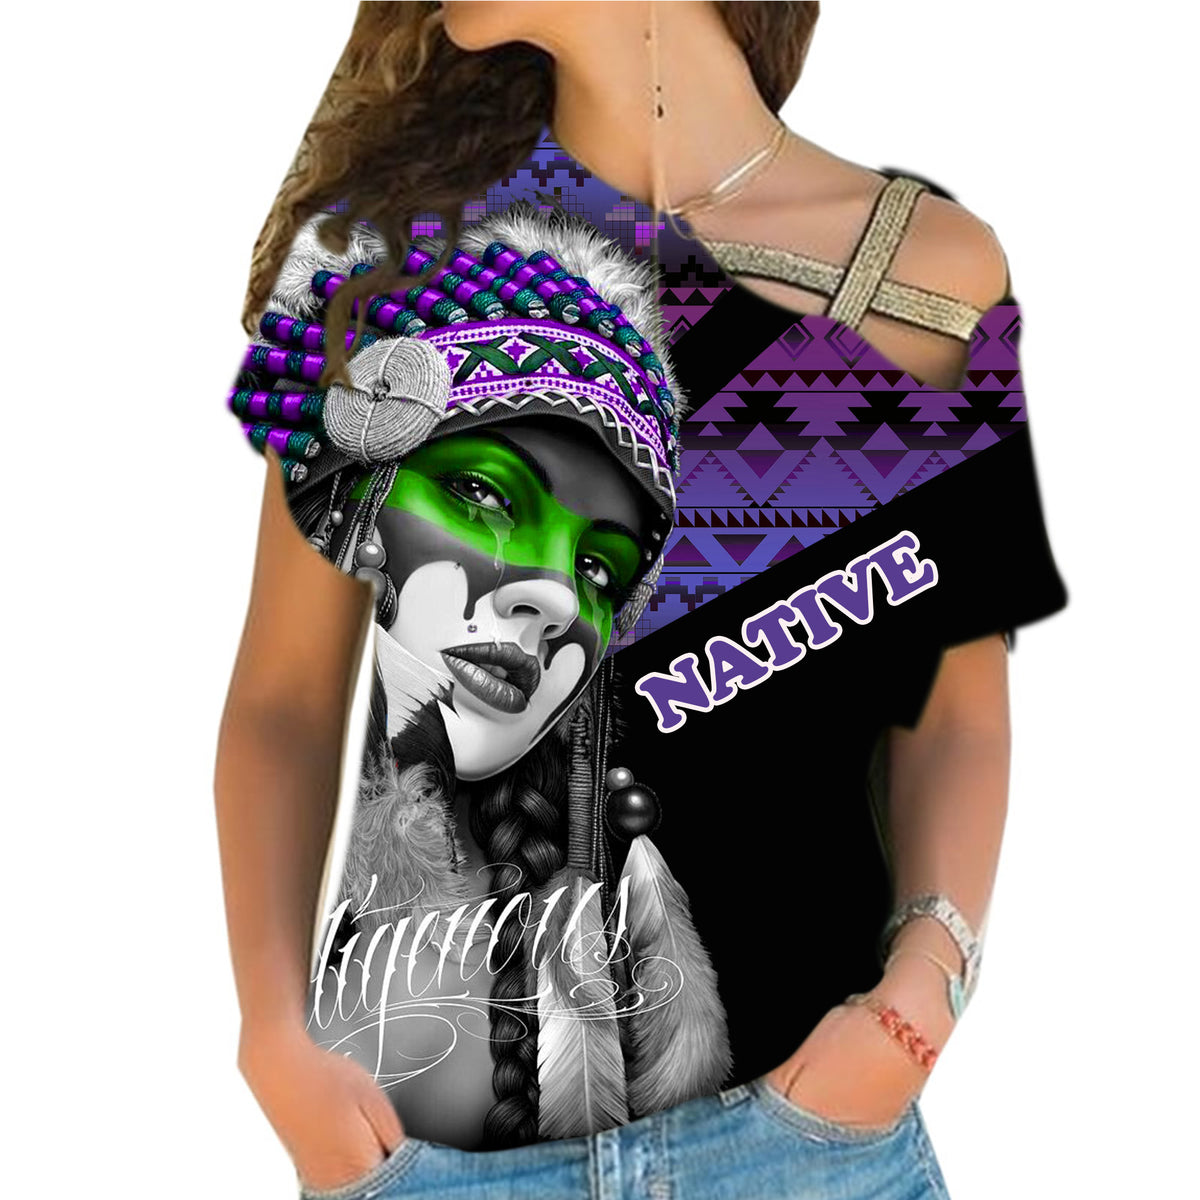 Powwow StoreCRS0001229 Native American Cross Shoulder Shirt